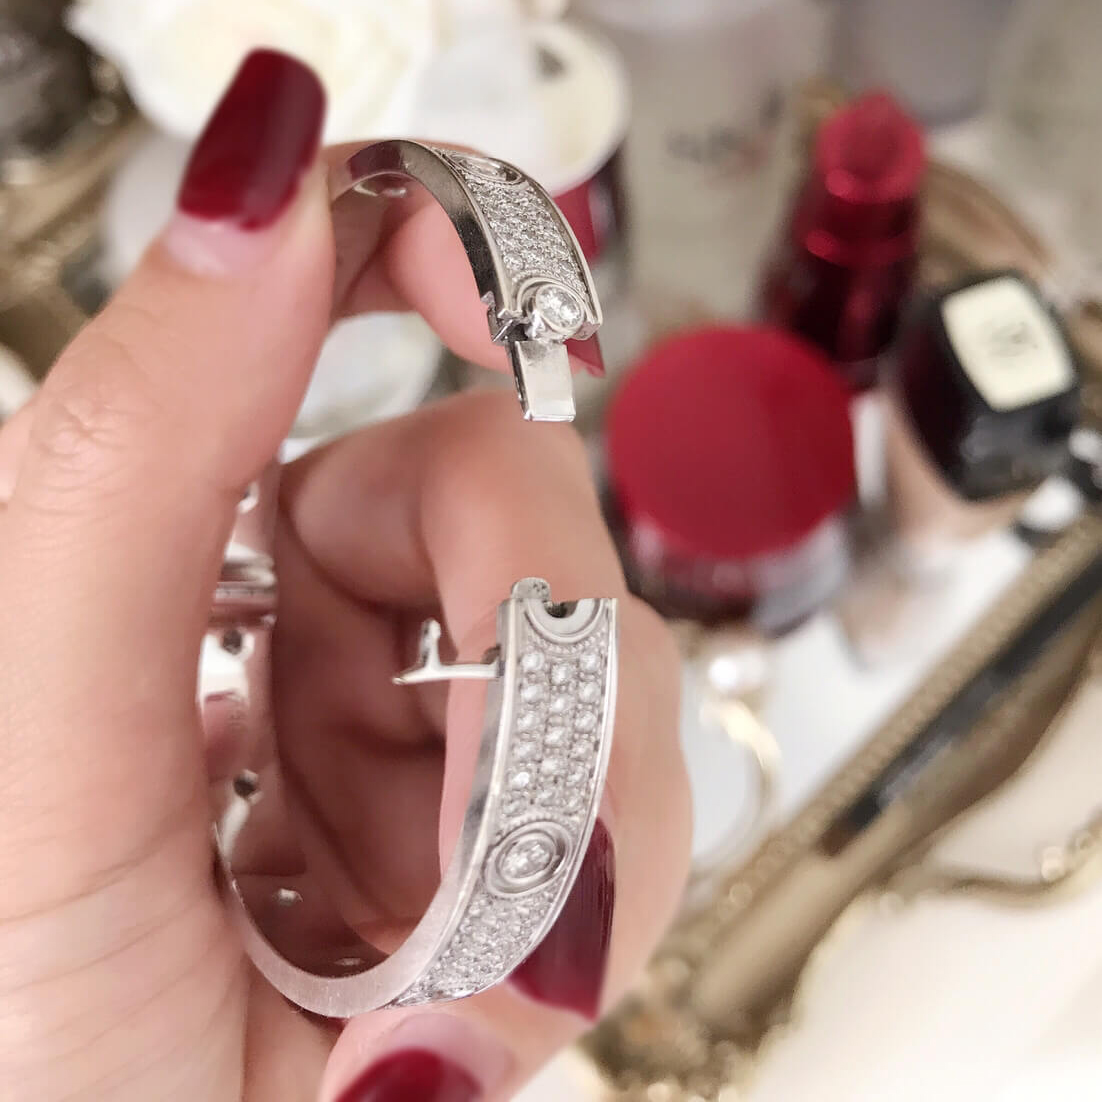 Imitation Cartier Love Bracelet with diamonds